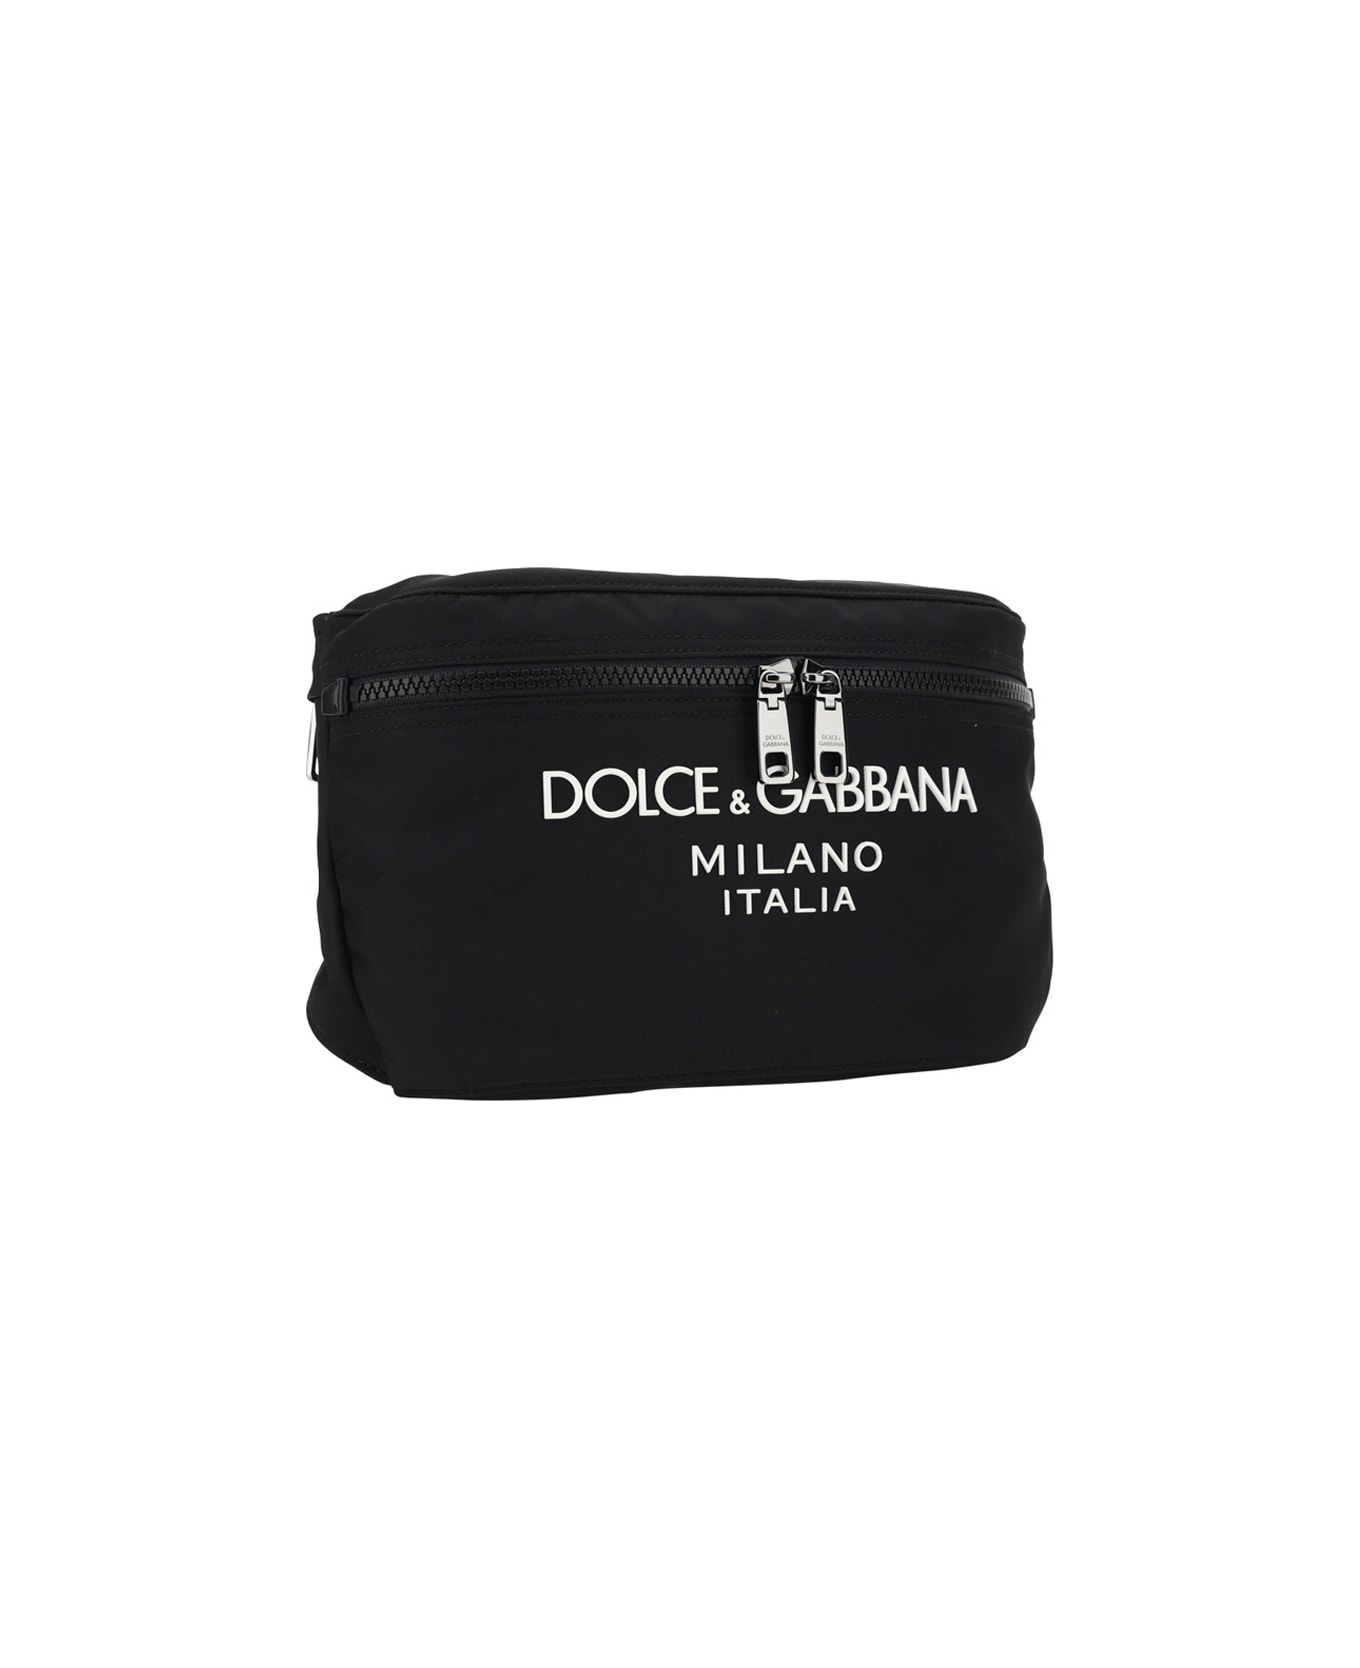 Dolce & Gabbana Belt Bag - Nero/nero